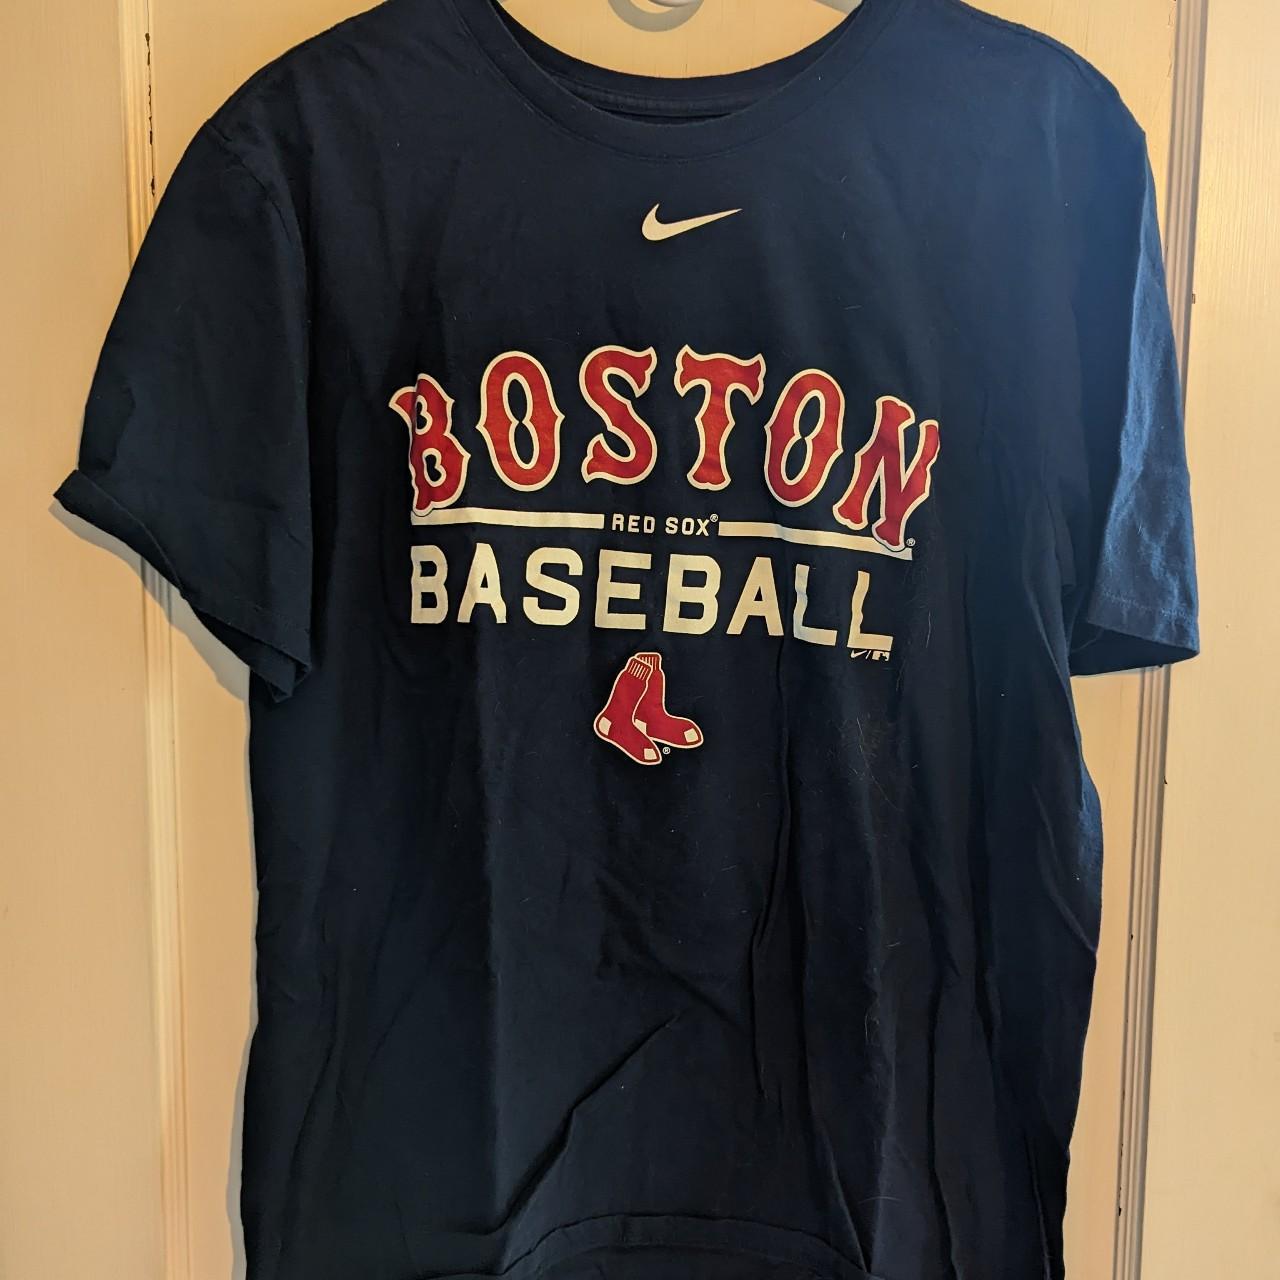 Boston Red Sox baseball t-shirt from Nike, size XL - Depop